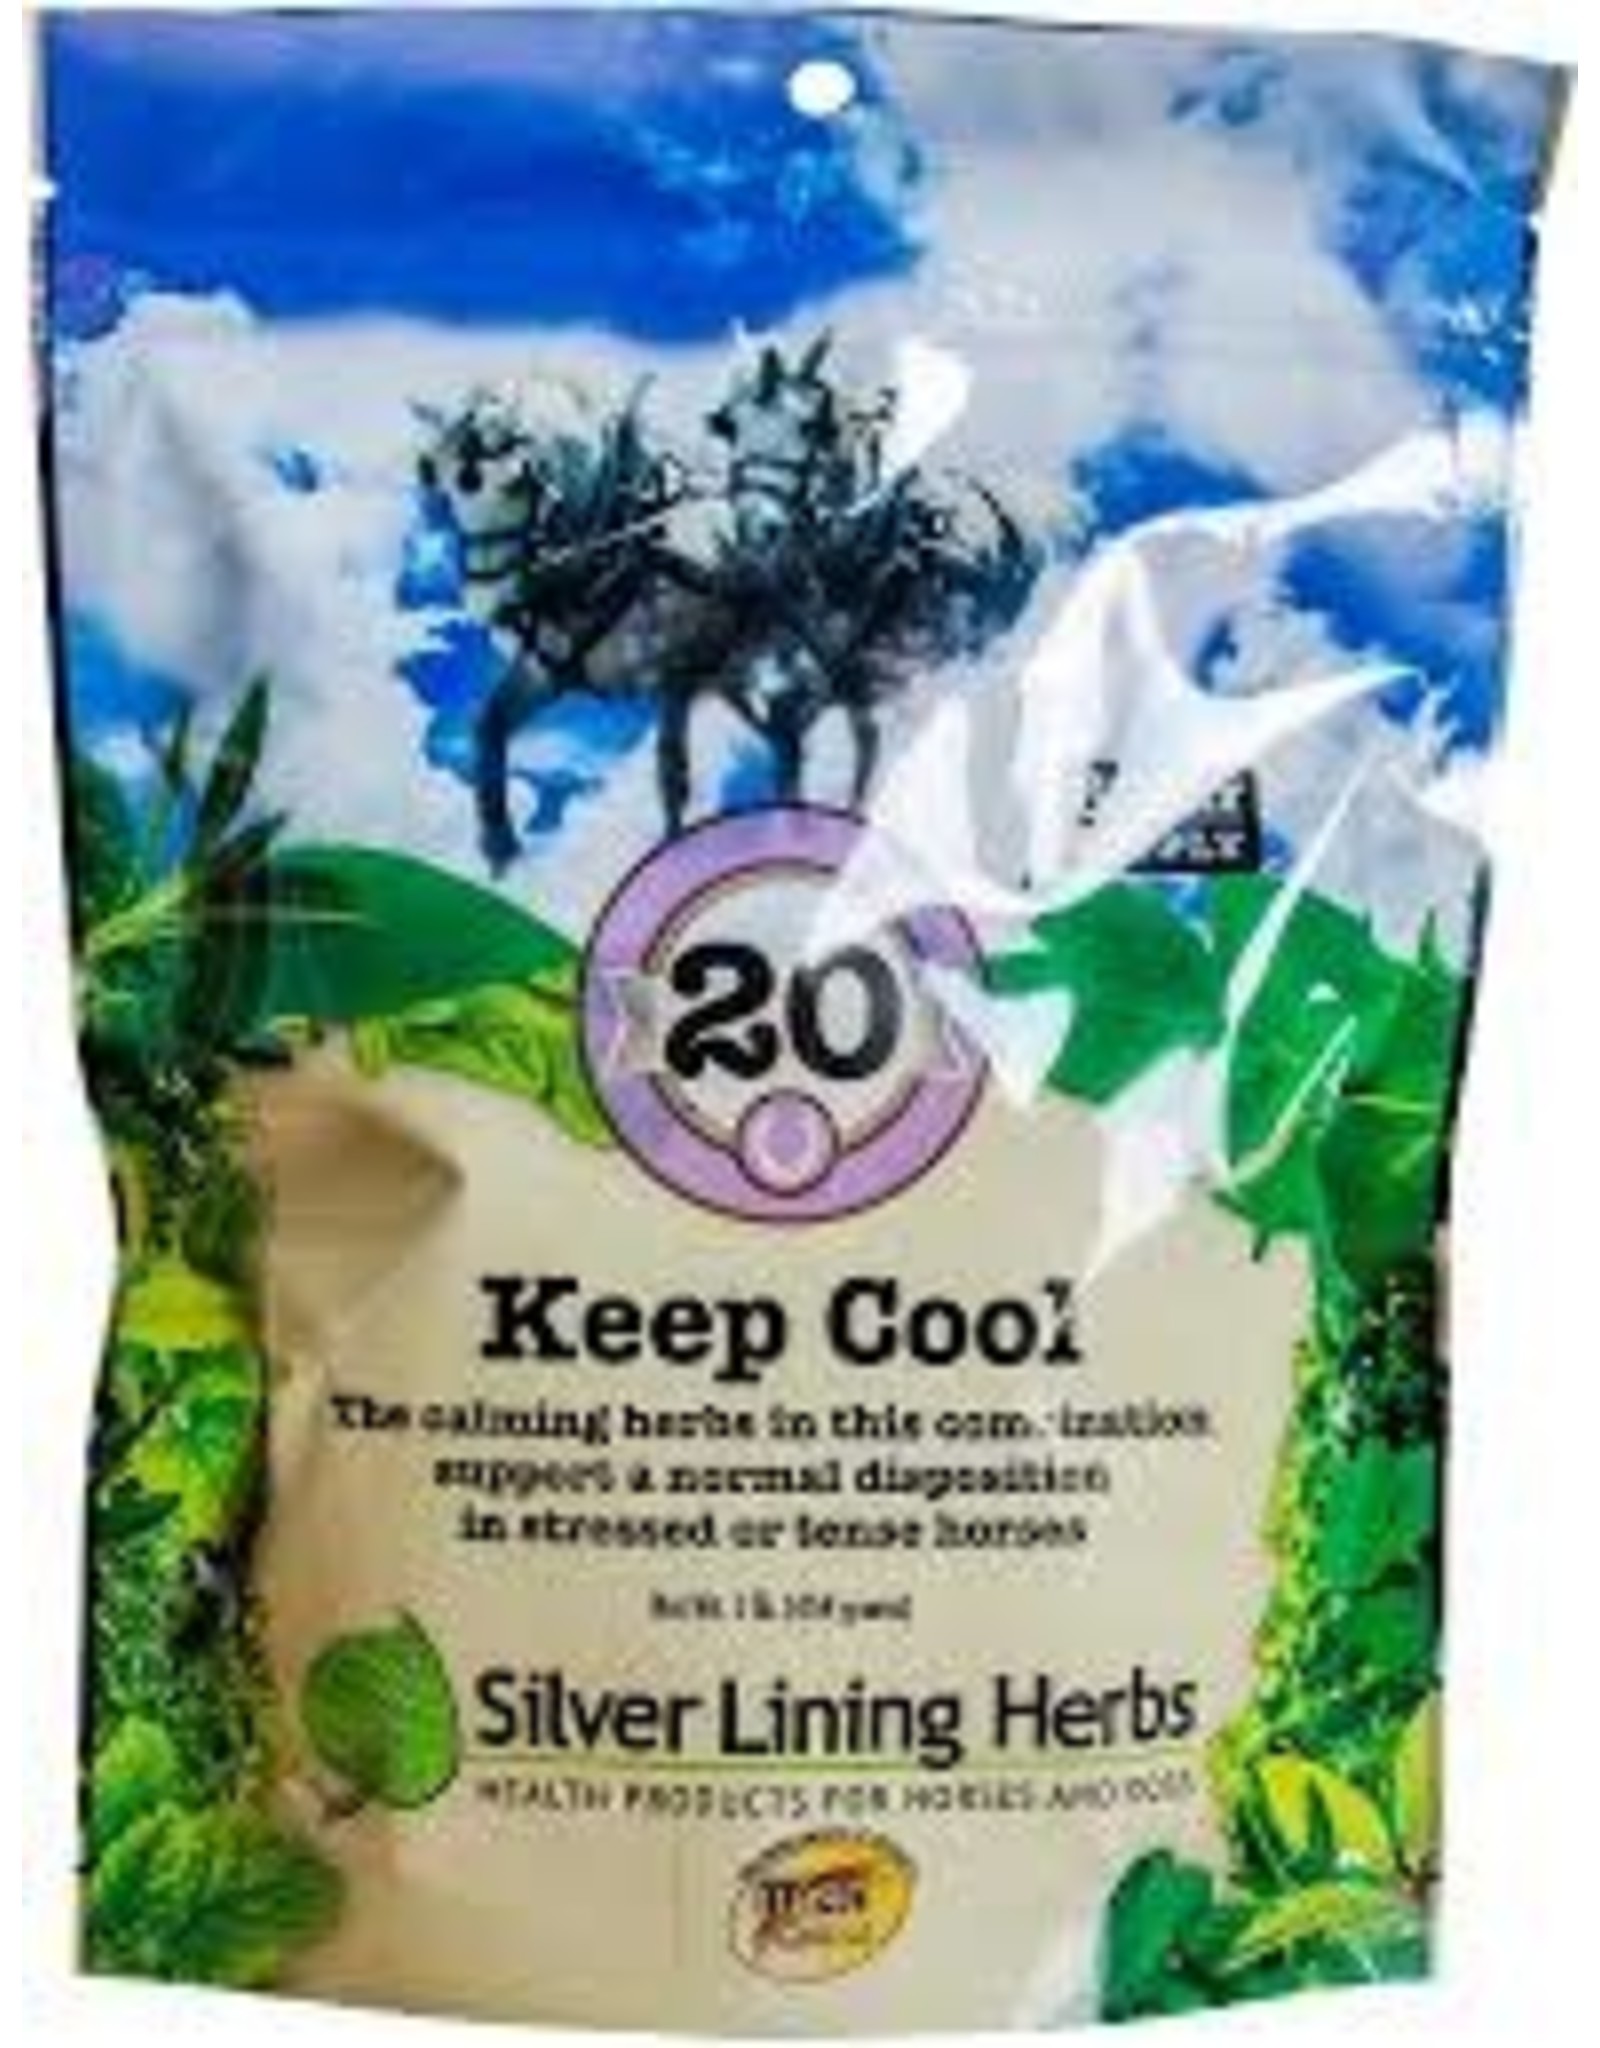 Silver Lining Herbs #20 Keep Cool SLH E20-1